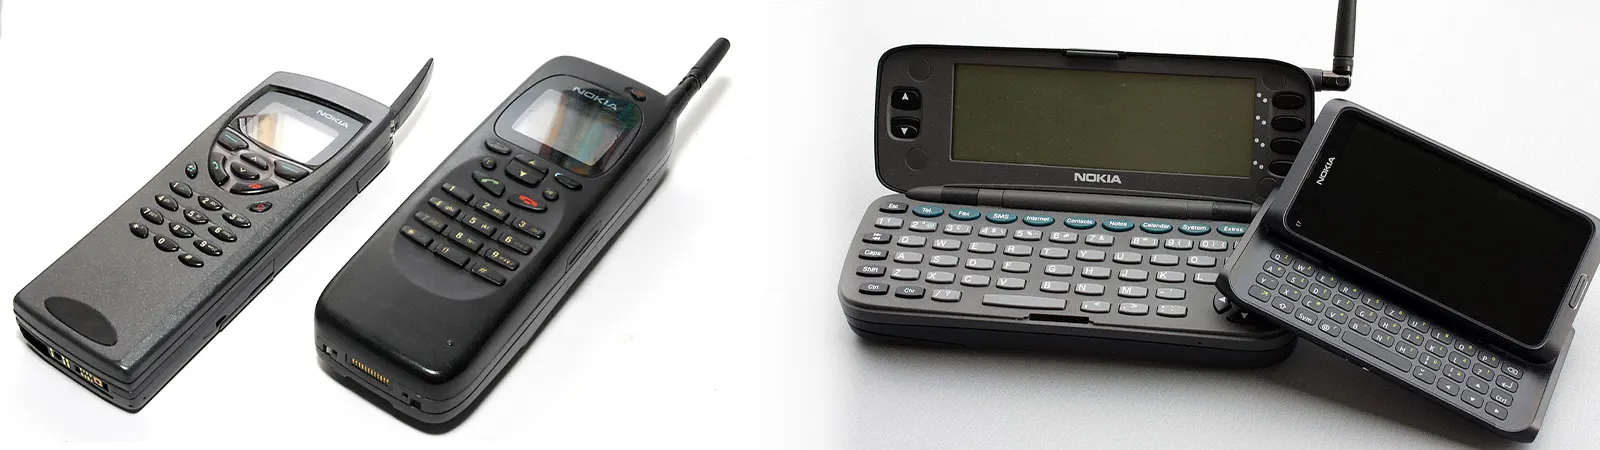 Nokia 9000 Communicator (1996)